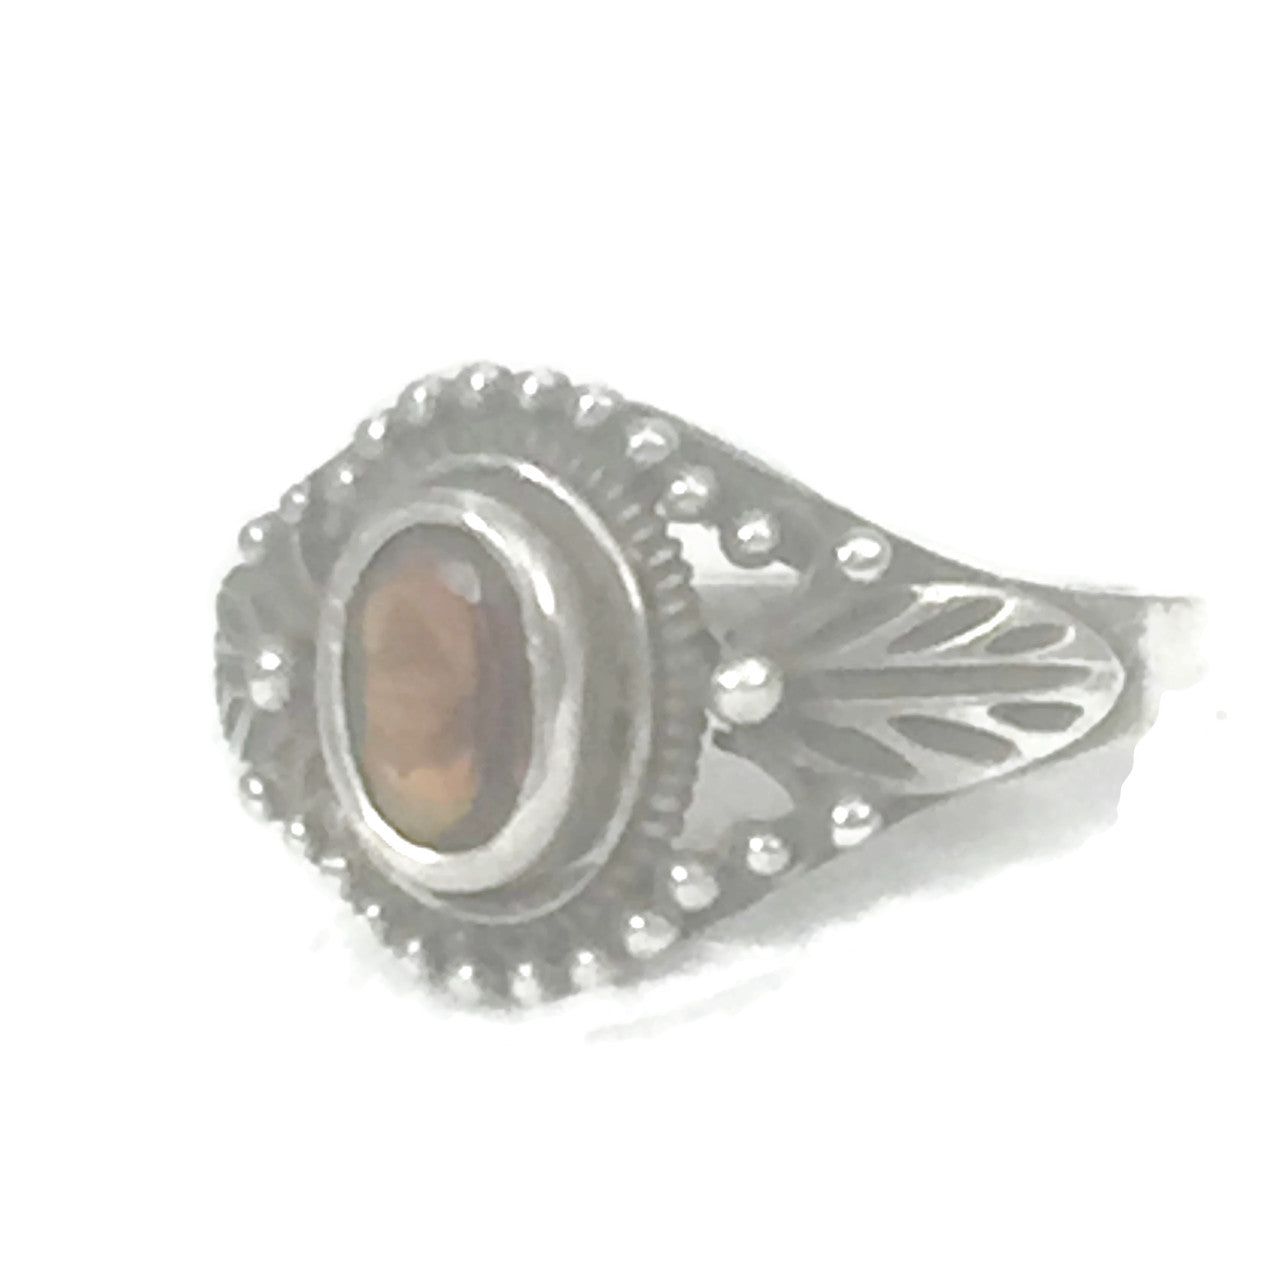 Garnet Ring Leaves Vintage Solitaire Sterling Silver Ring Size 4.7